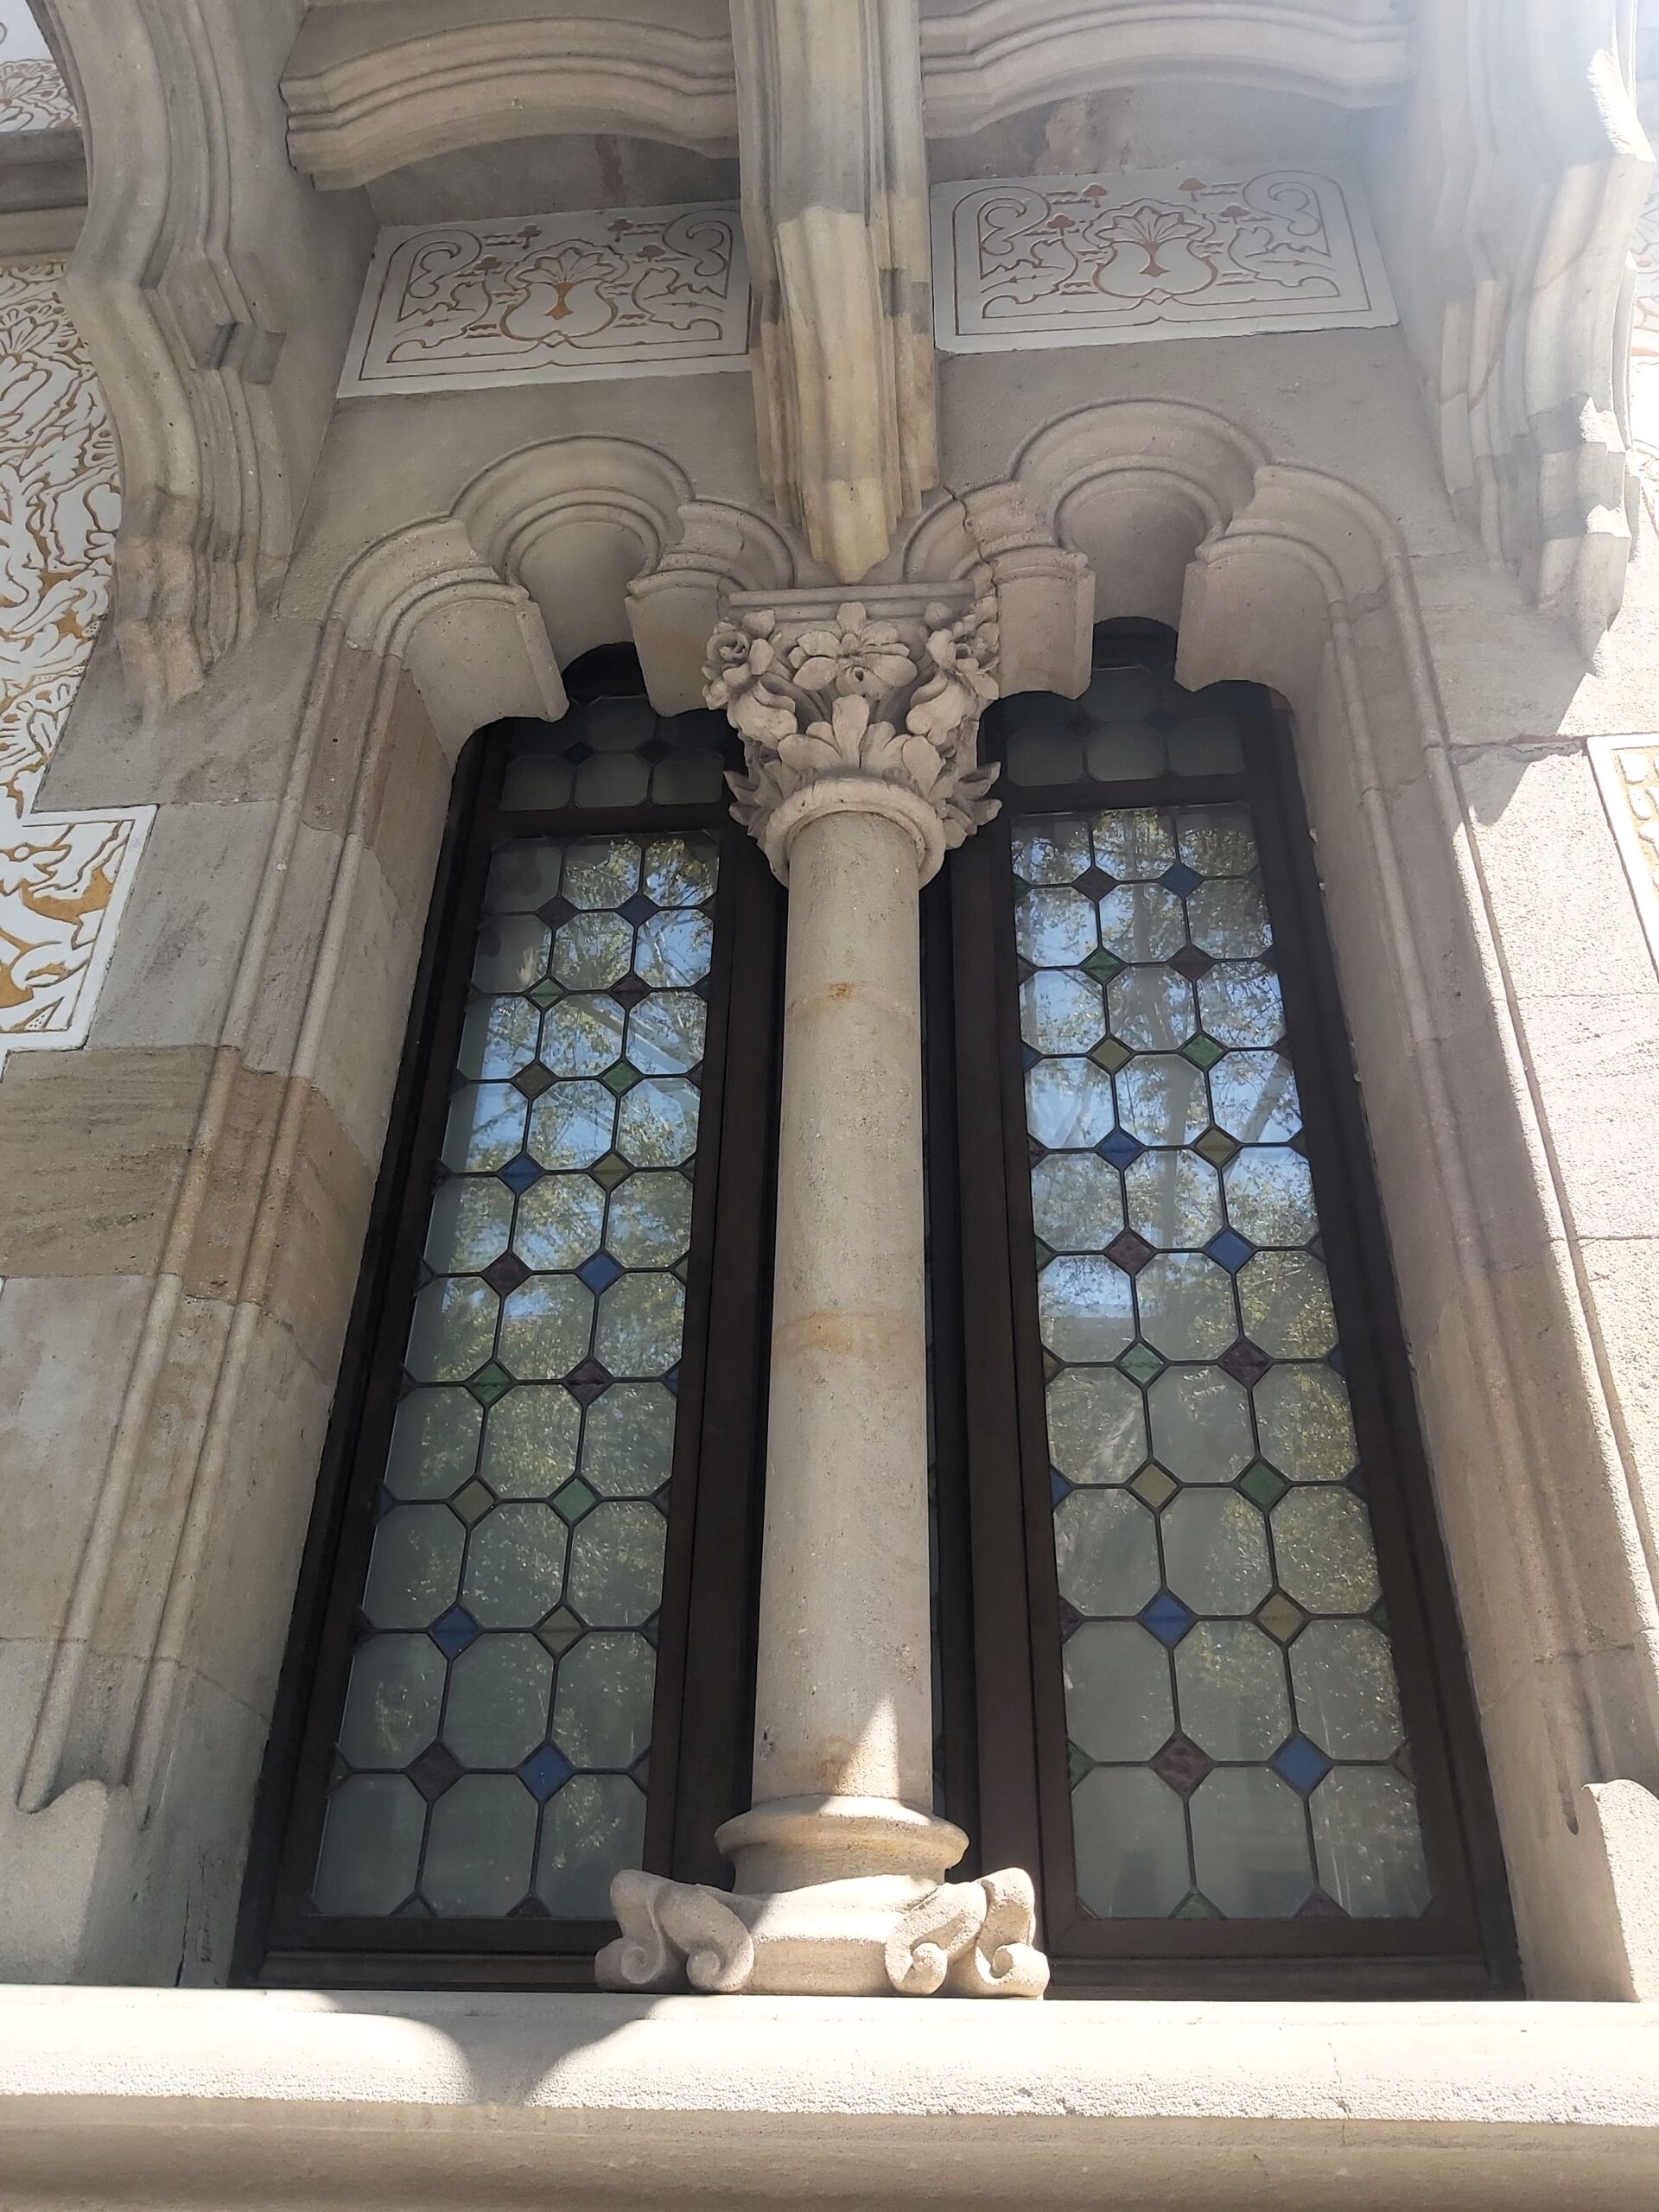 Stained glass window in Barcelona, Spain